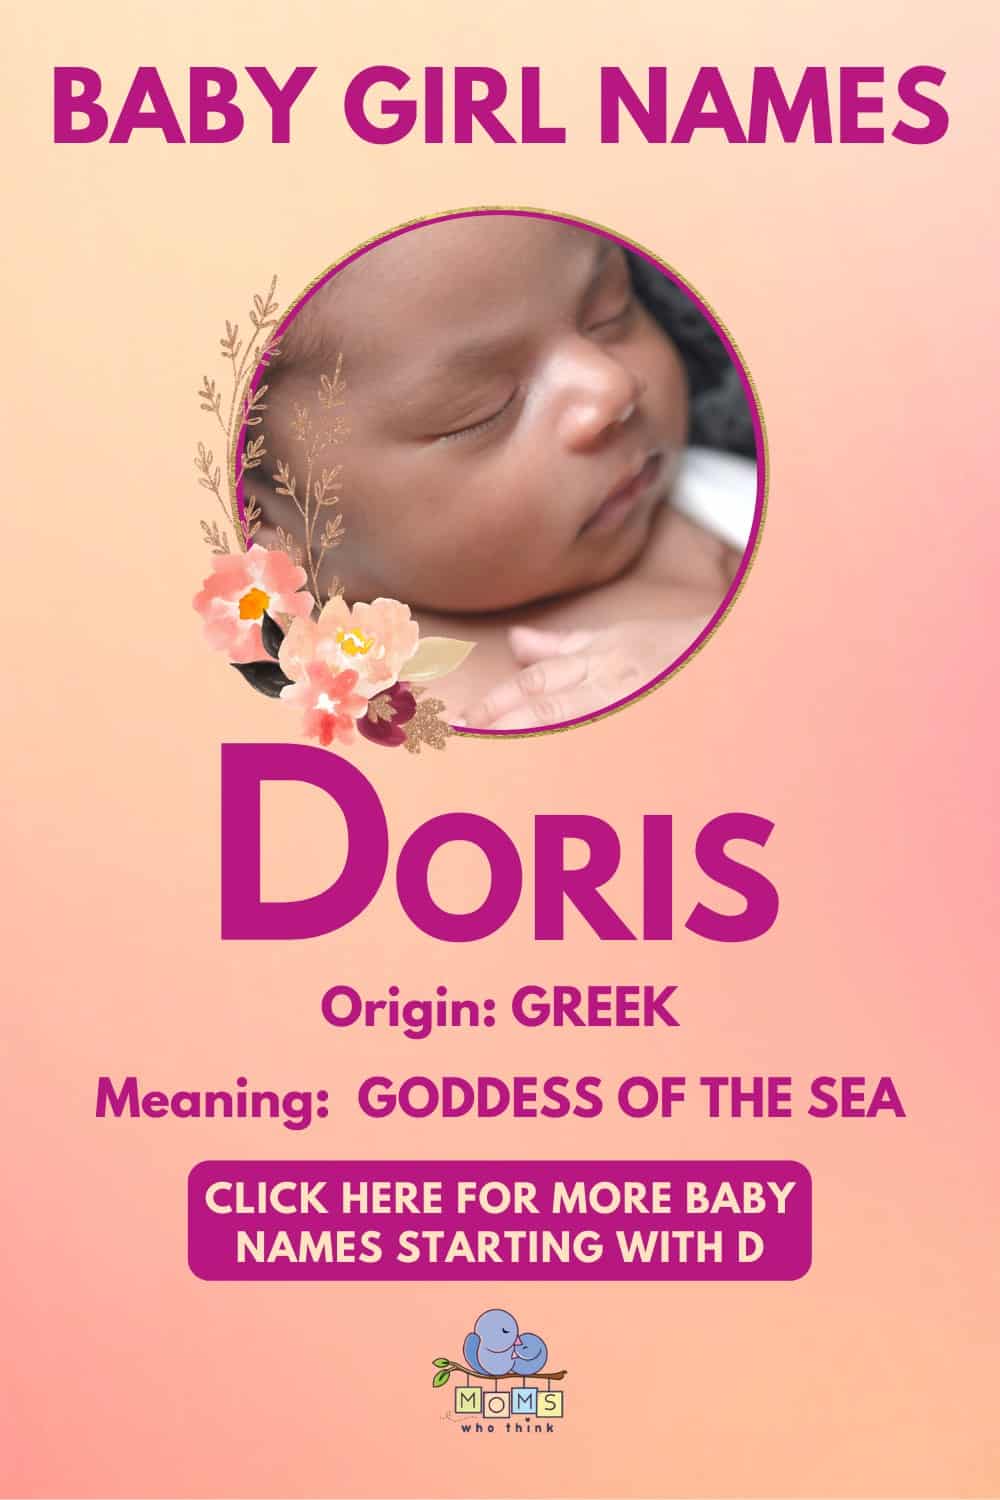 Baby girl name meanings - Doris